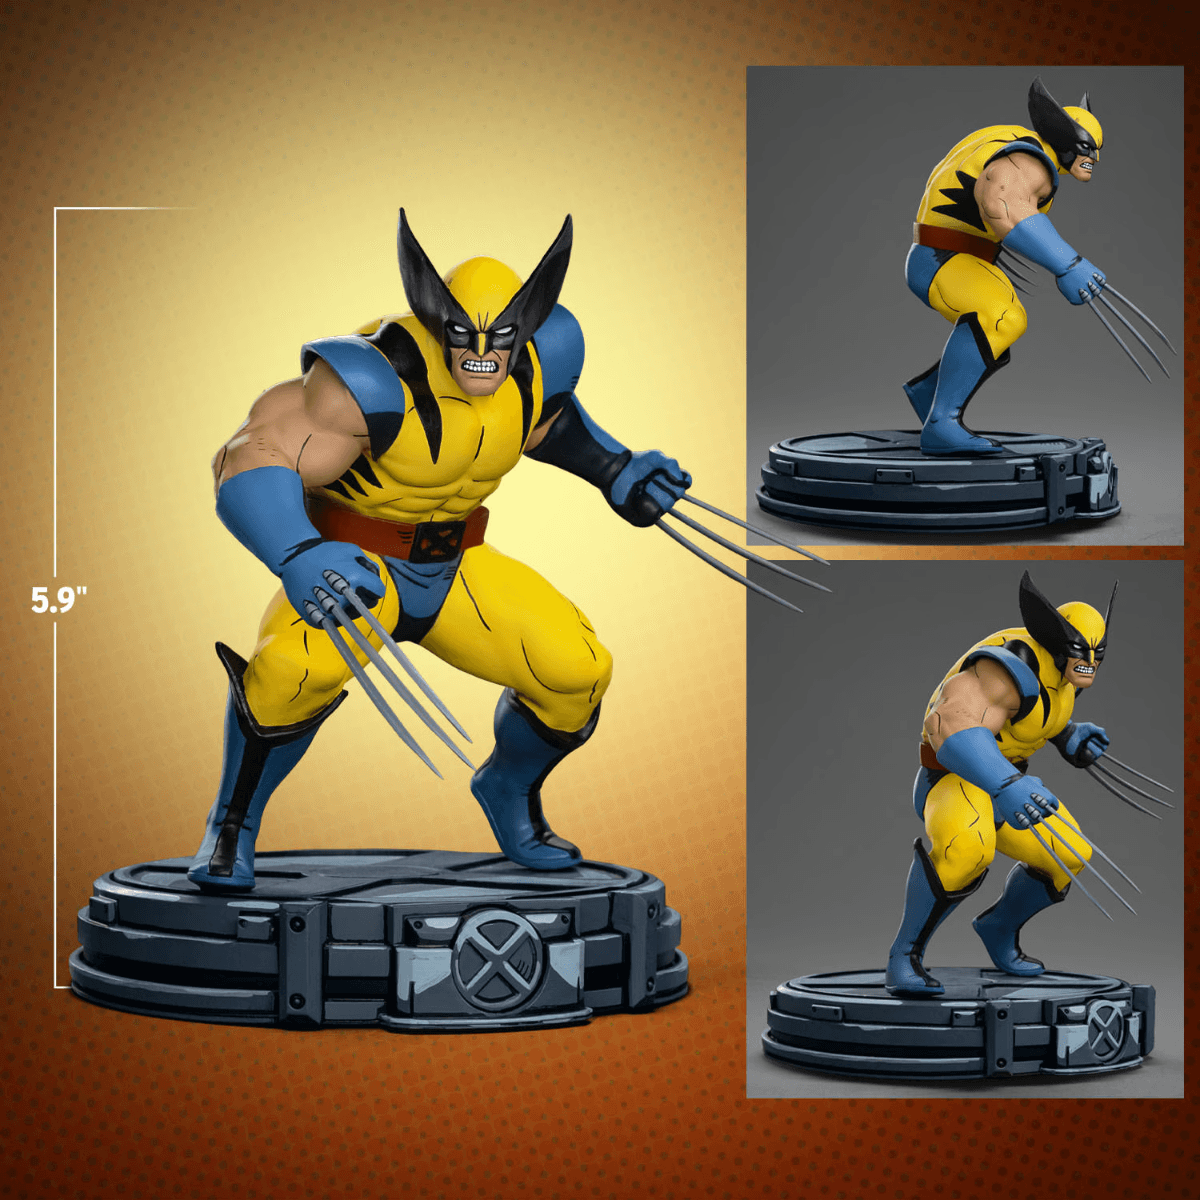 IRO55404 X-Men '97 - Wolverine 1:10 Scale Statue - Iron Studios - Titan Pop Culture